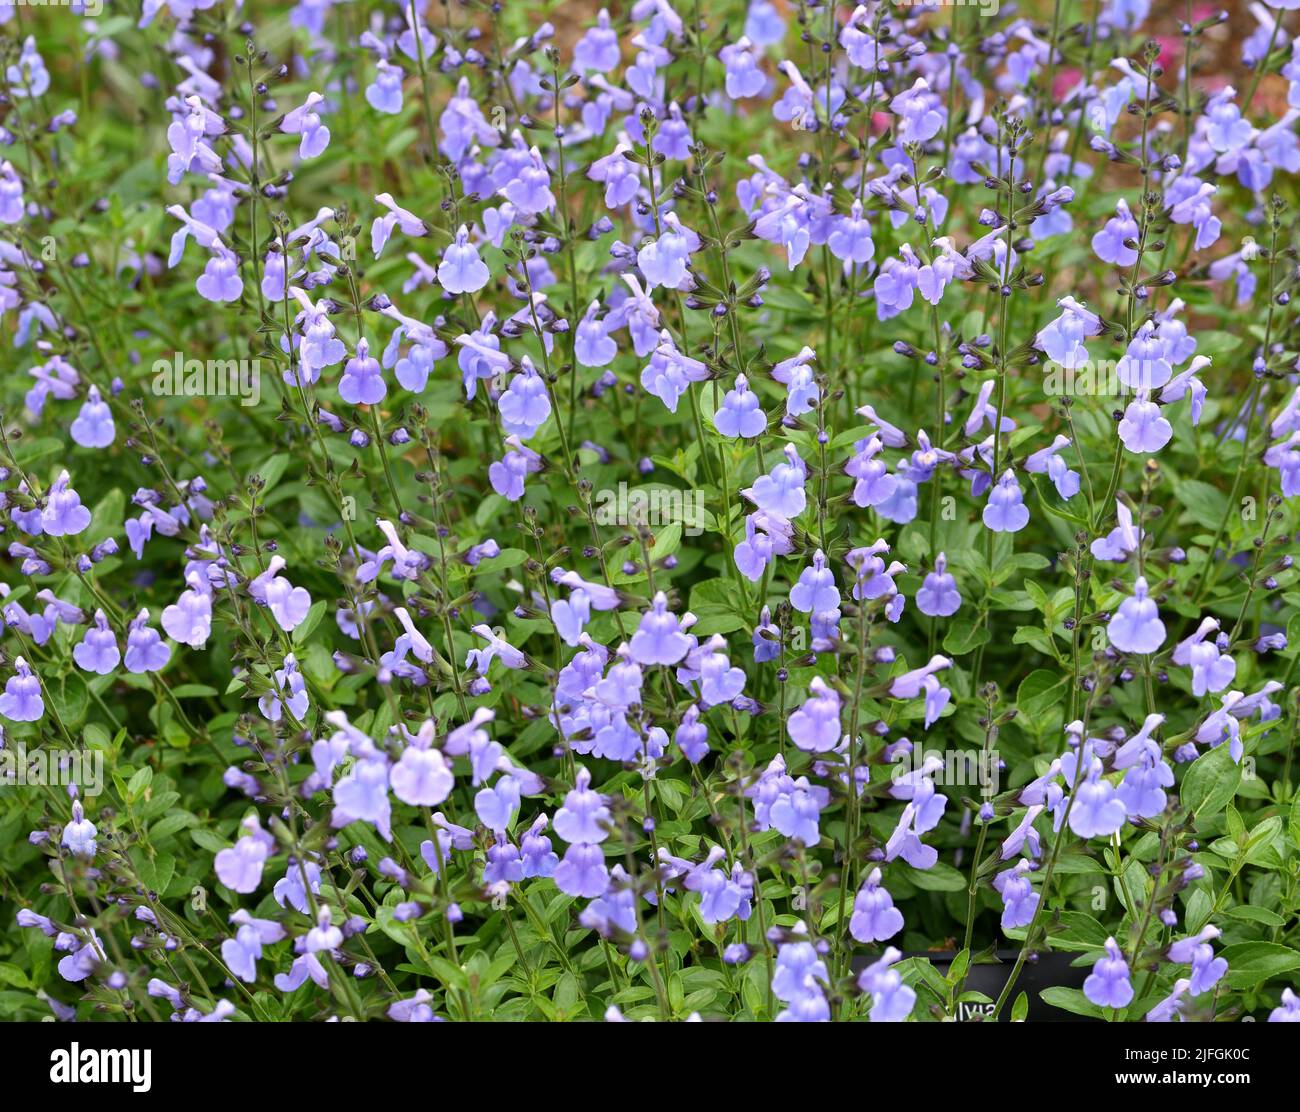 Salvia delice Aquamarine. Stock Photo